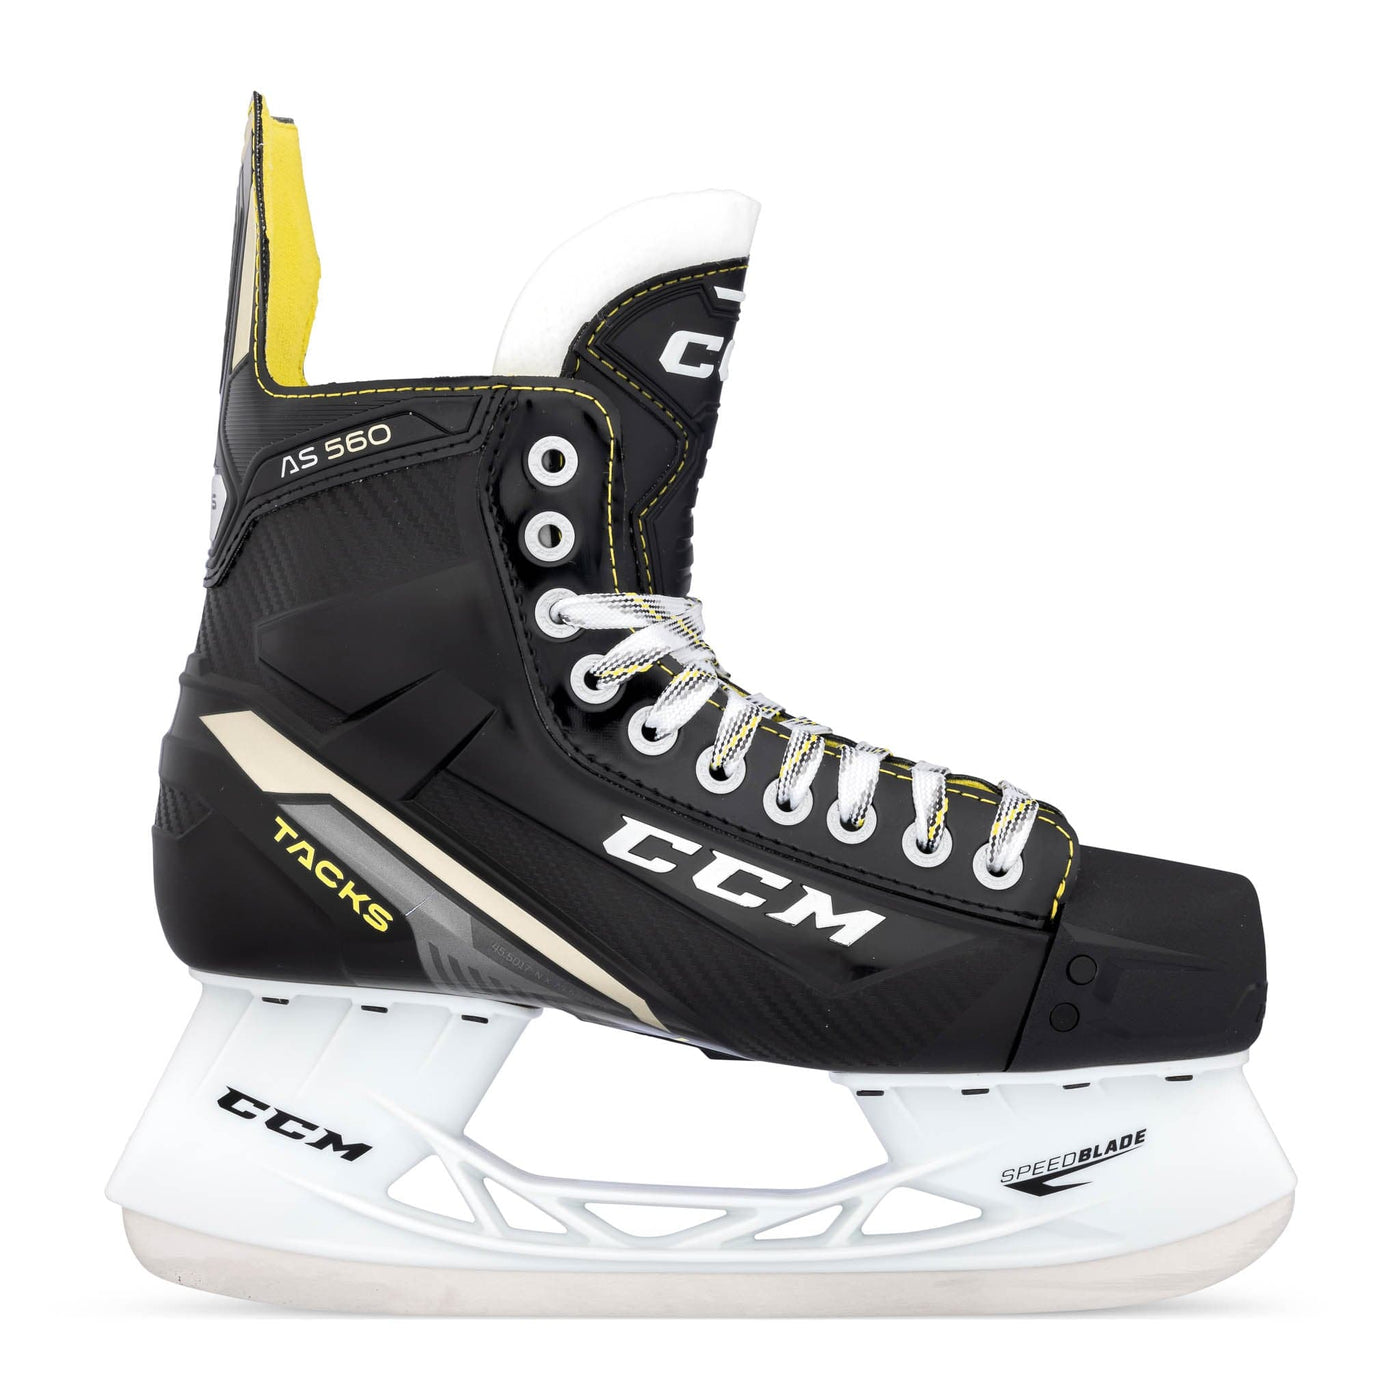 CCM Tacks AS560 Senior Hockey Skates - The Hockey Shop Source For Sports